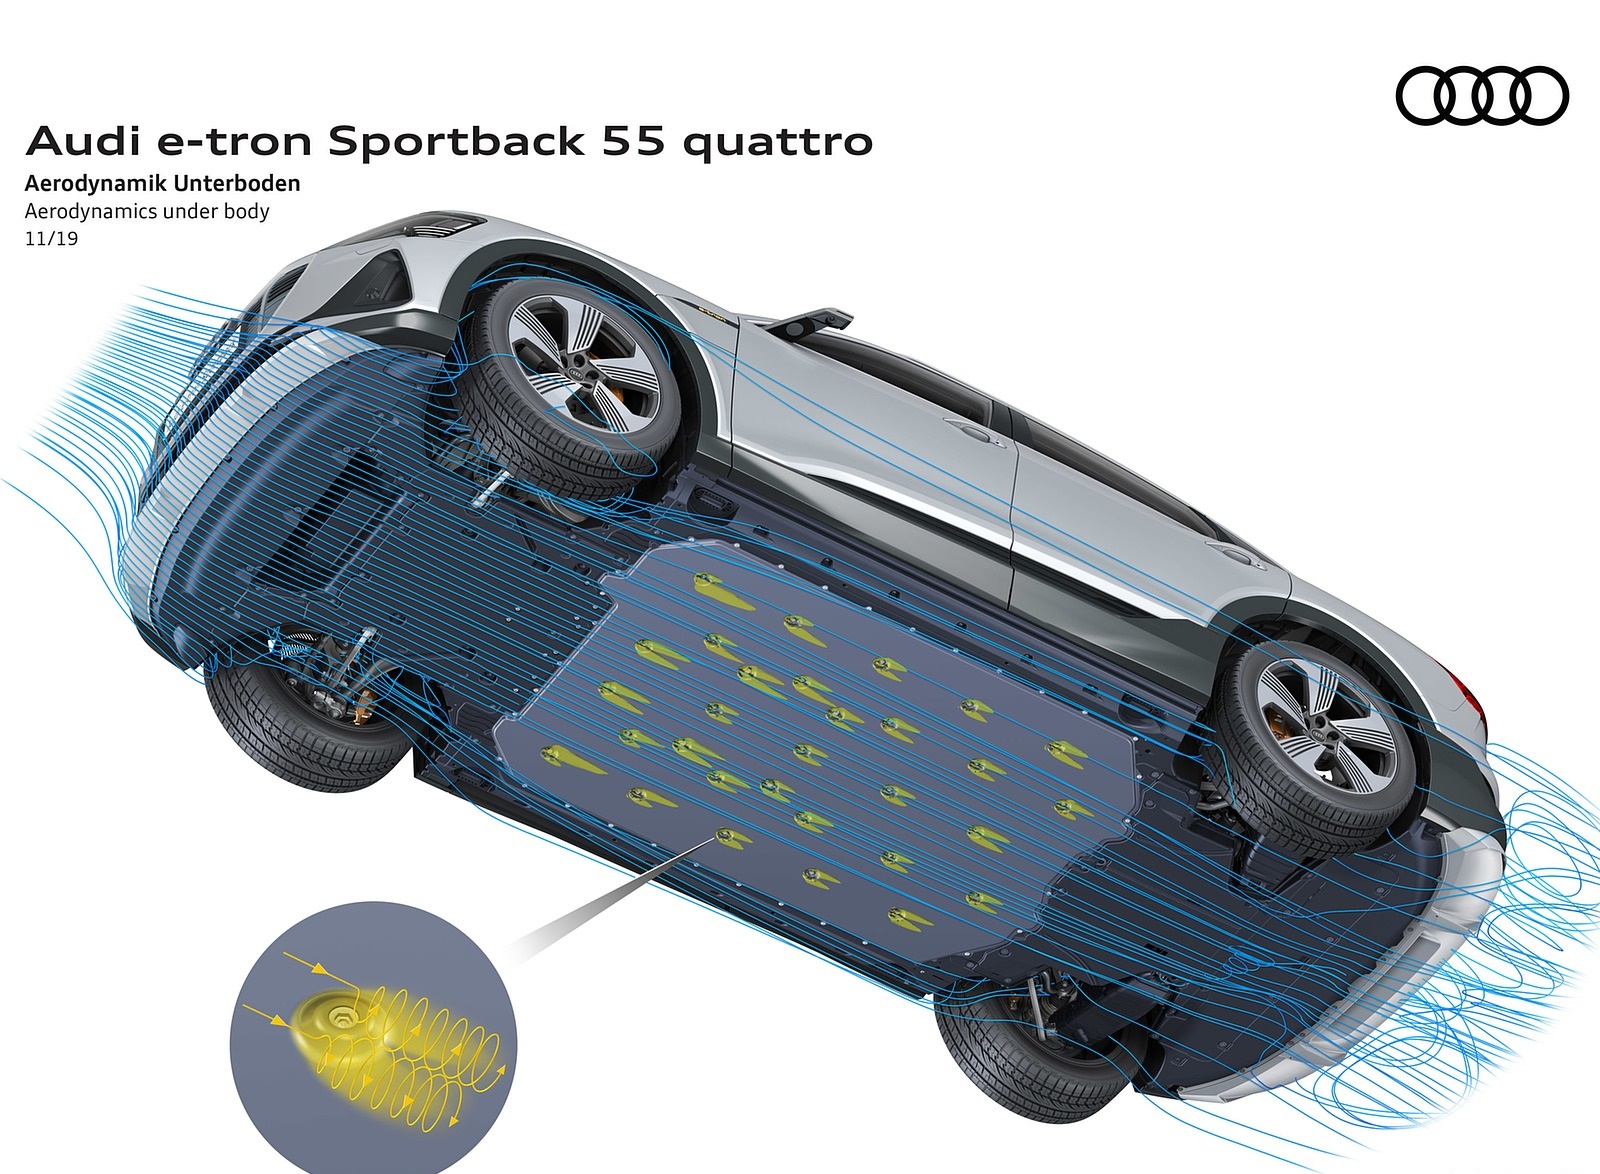 2020 Audi e-tron Sportback Aerodynamics under body Wallpapers #124 of 145